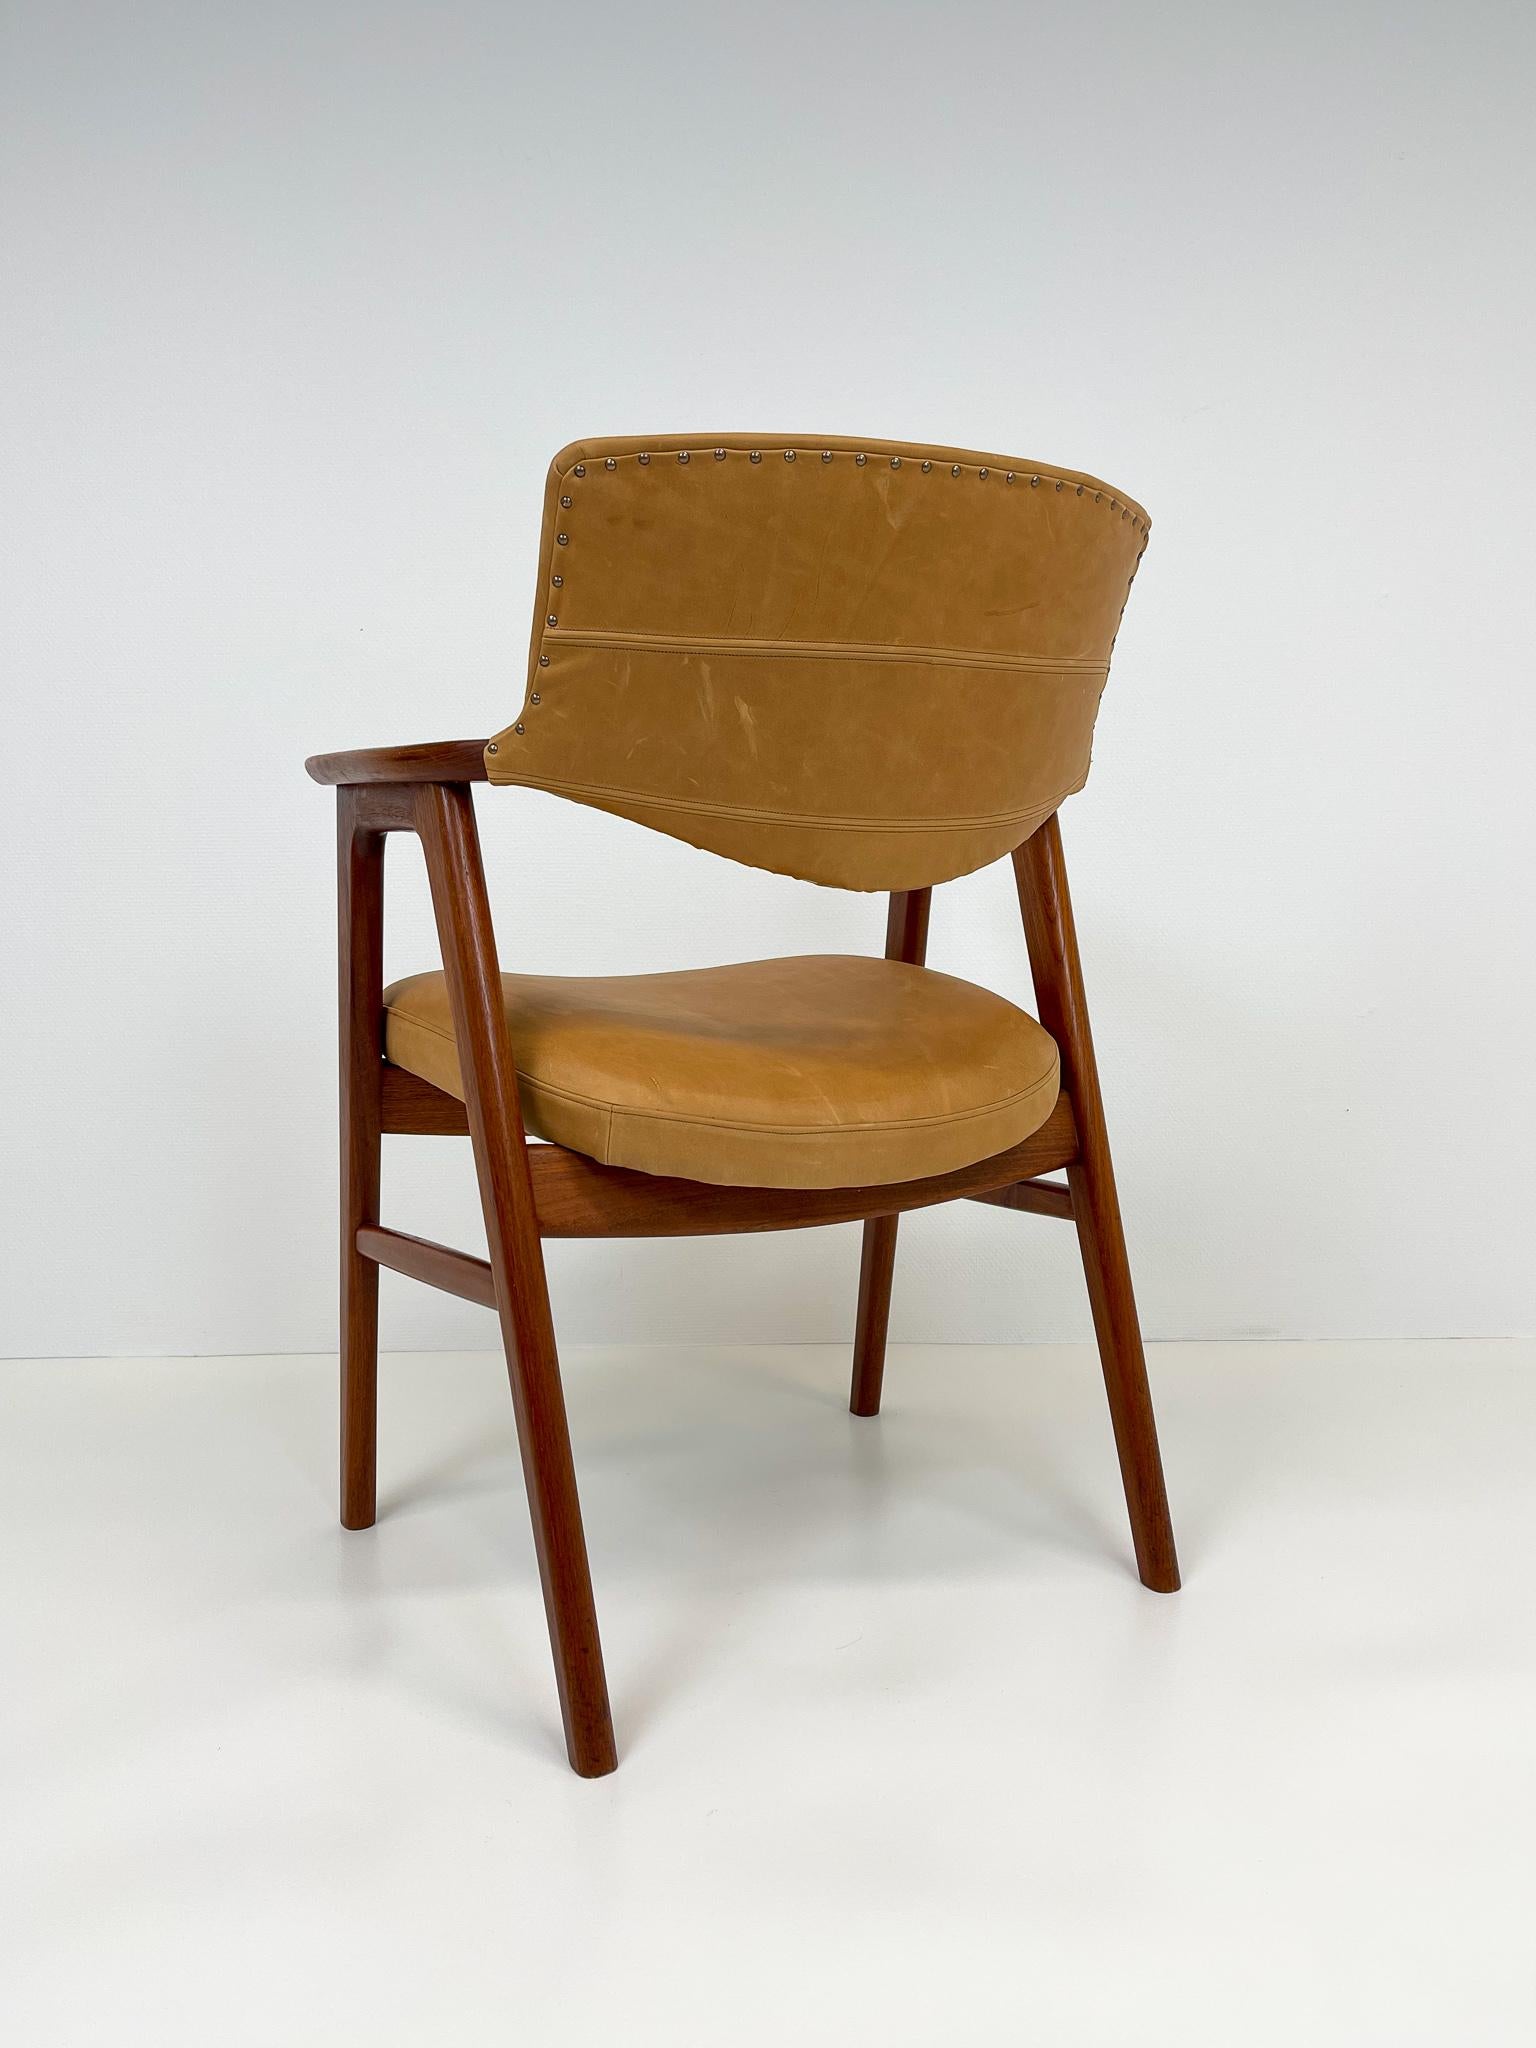 Midcentury Erik Kirkegaard Danish Teak and Leather Desk Chair, 1960s For Sale 2